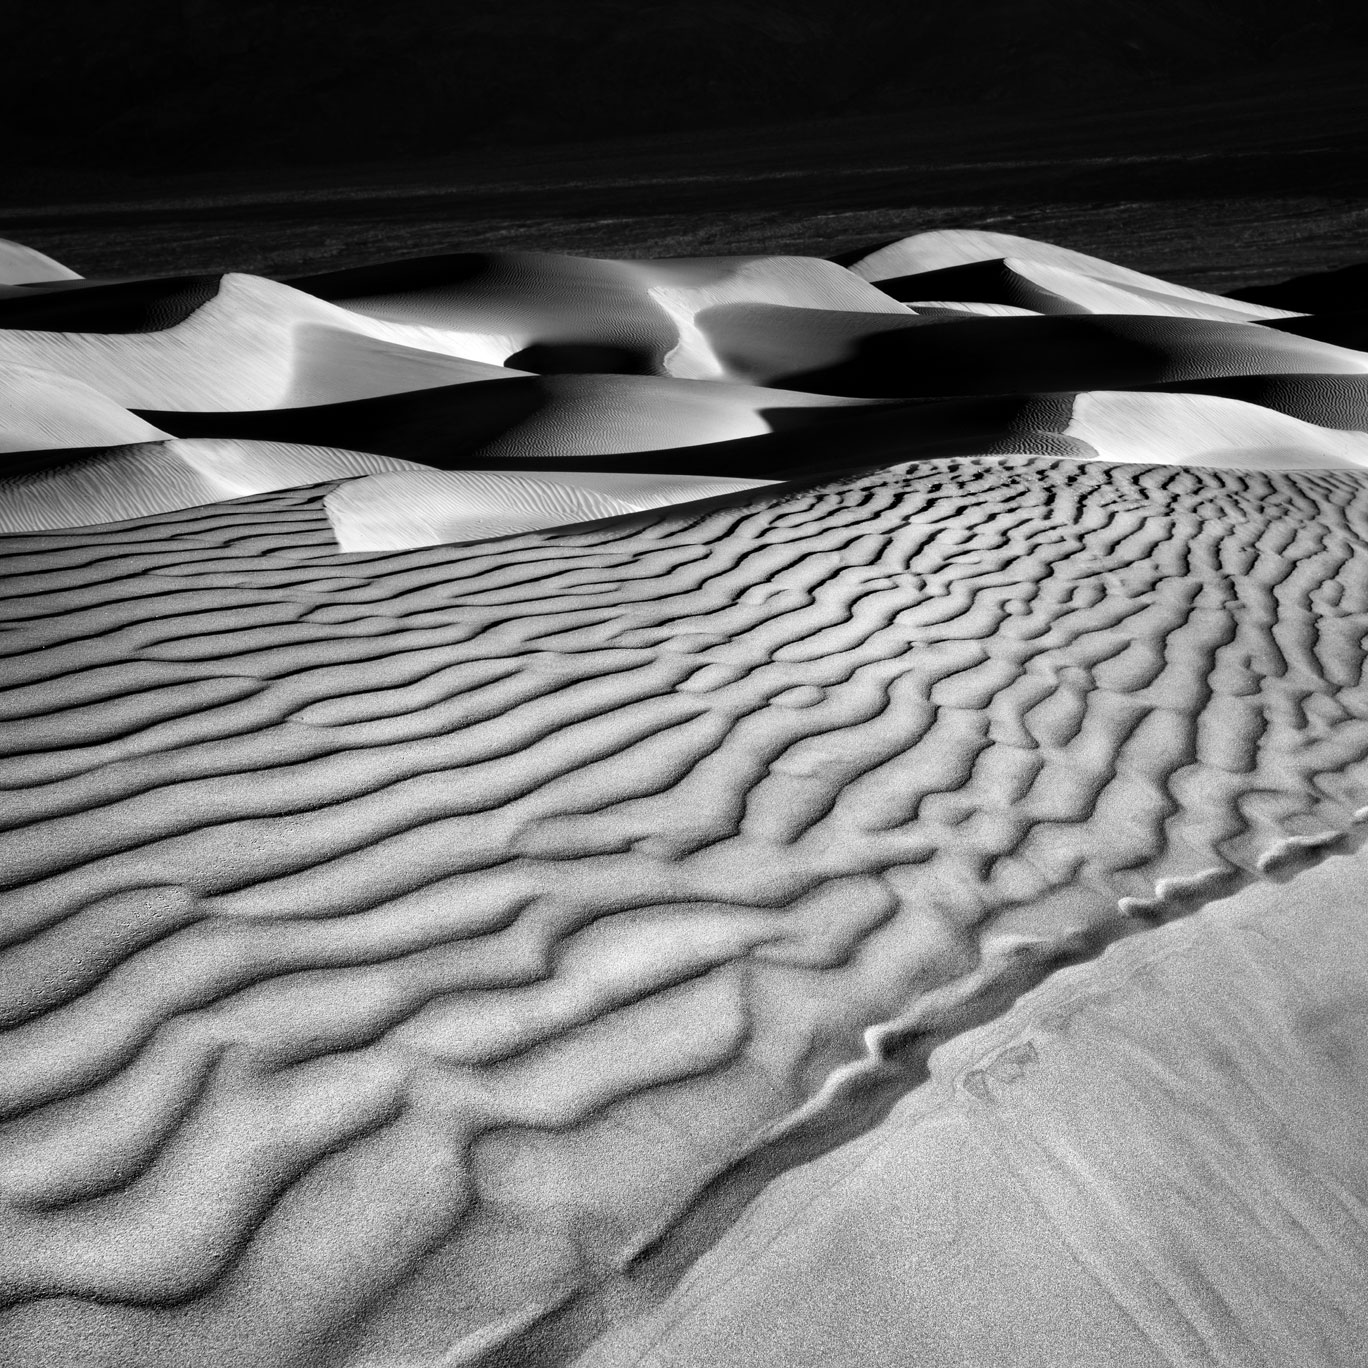 Mesquite Flats Sand Dunes, Death Valley